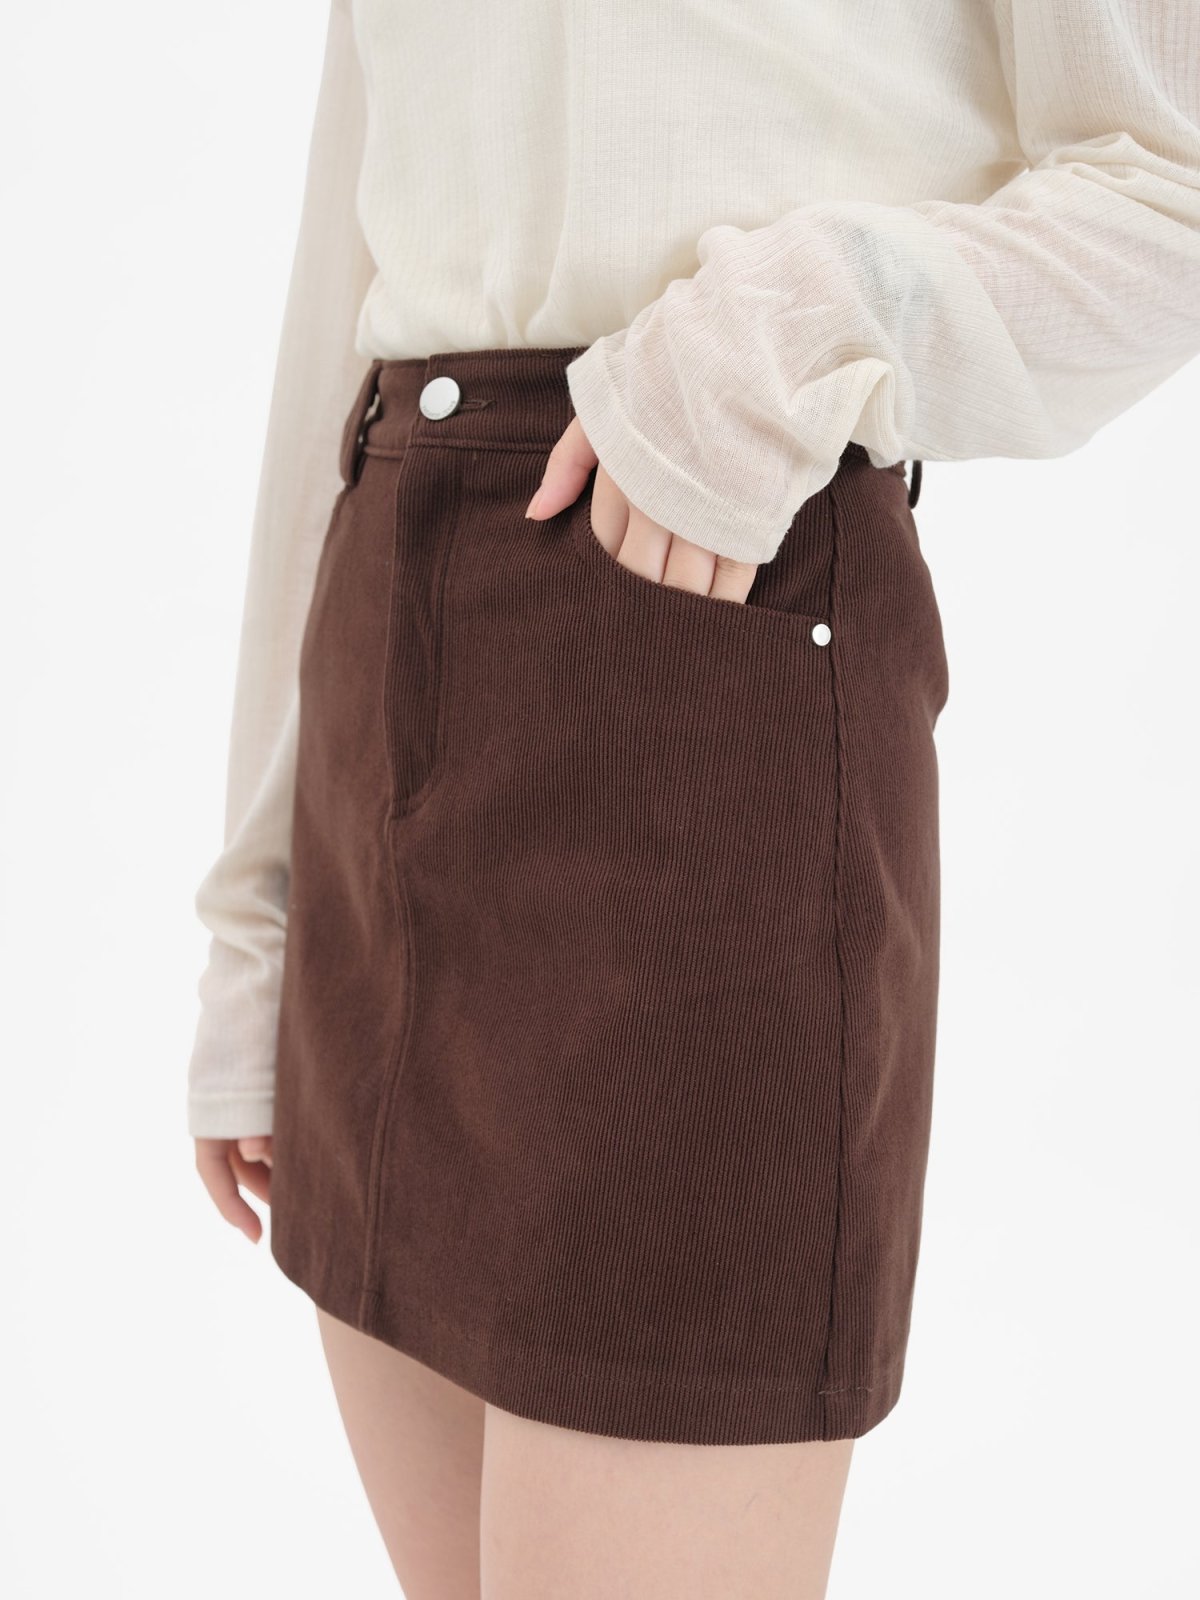 Reese Corduroy Mini Skirt - DAG-G-9854-22ToffeeS - Brownie - S - D'ZAGE Designs